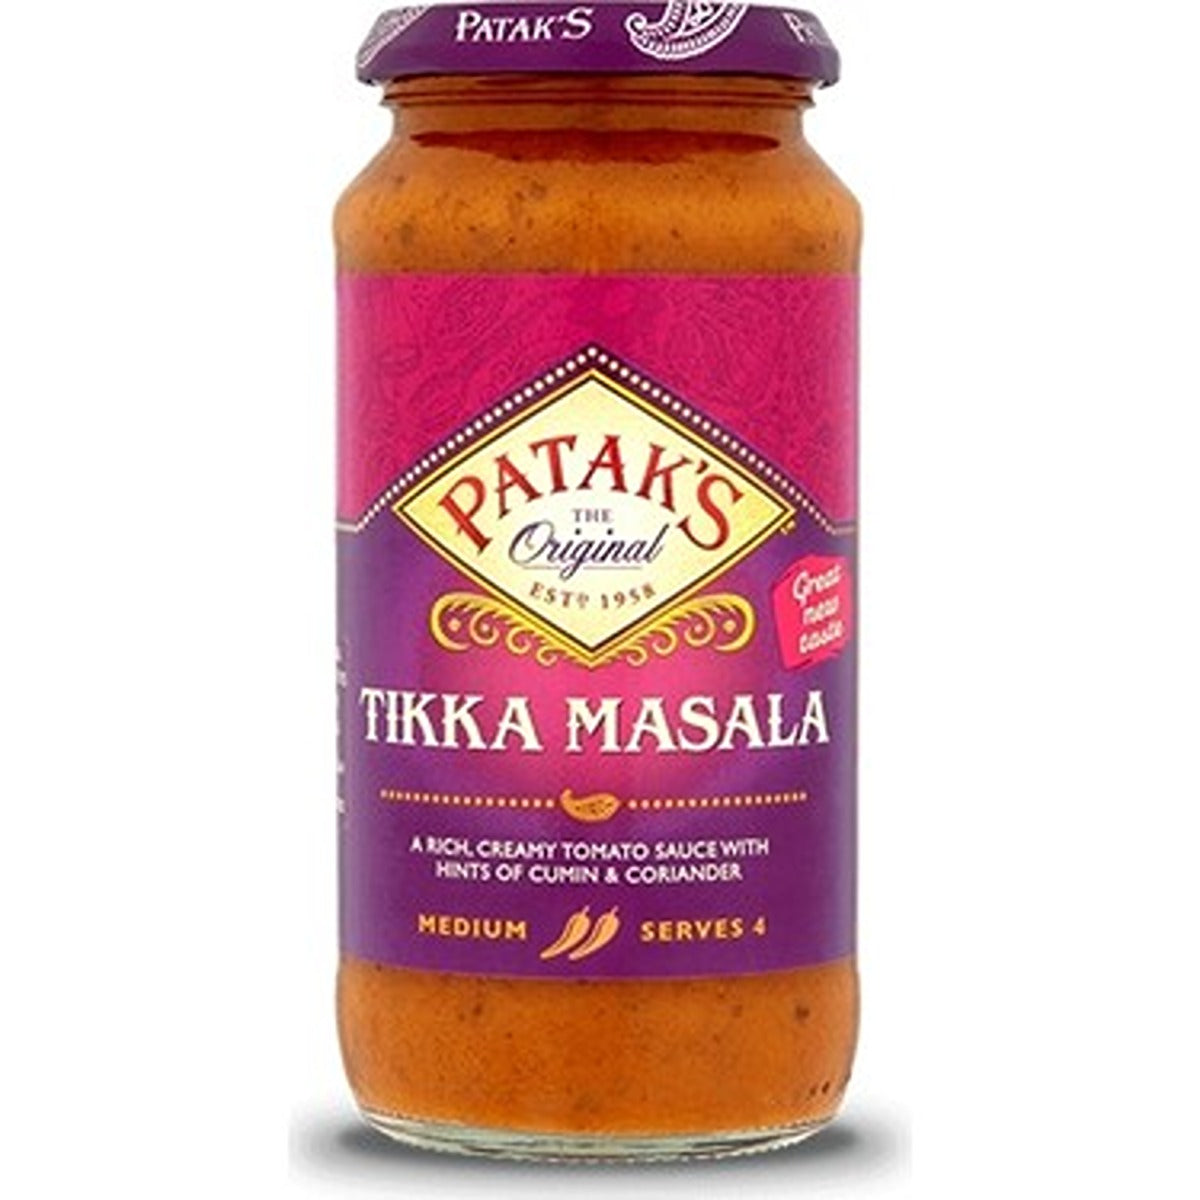 Patak's - Tikka Masala Cooking Sauce 450g in a jar.